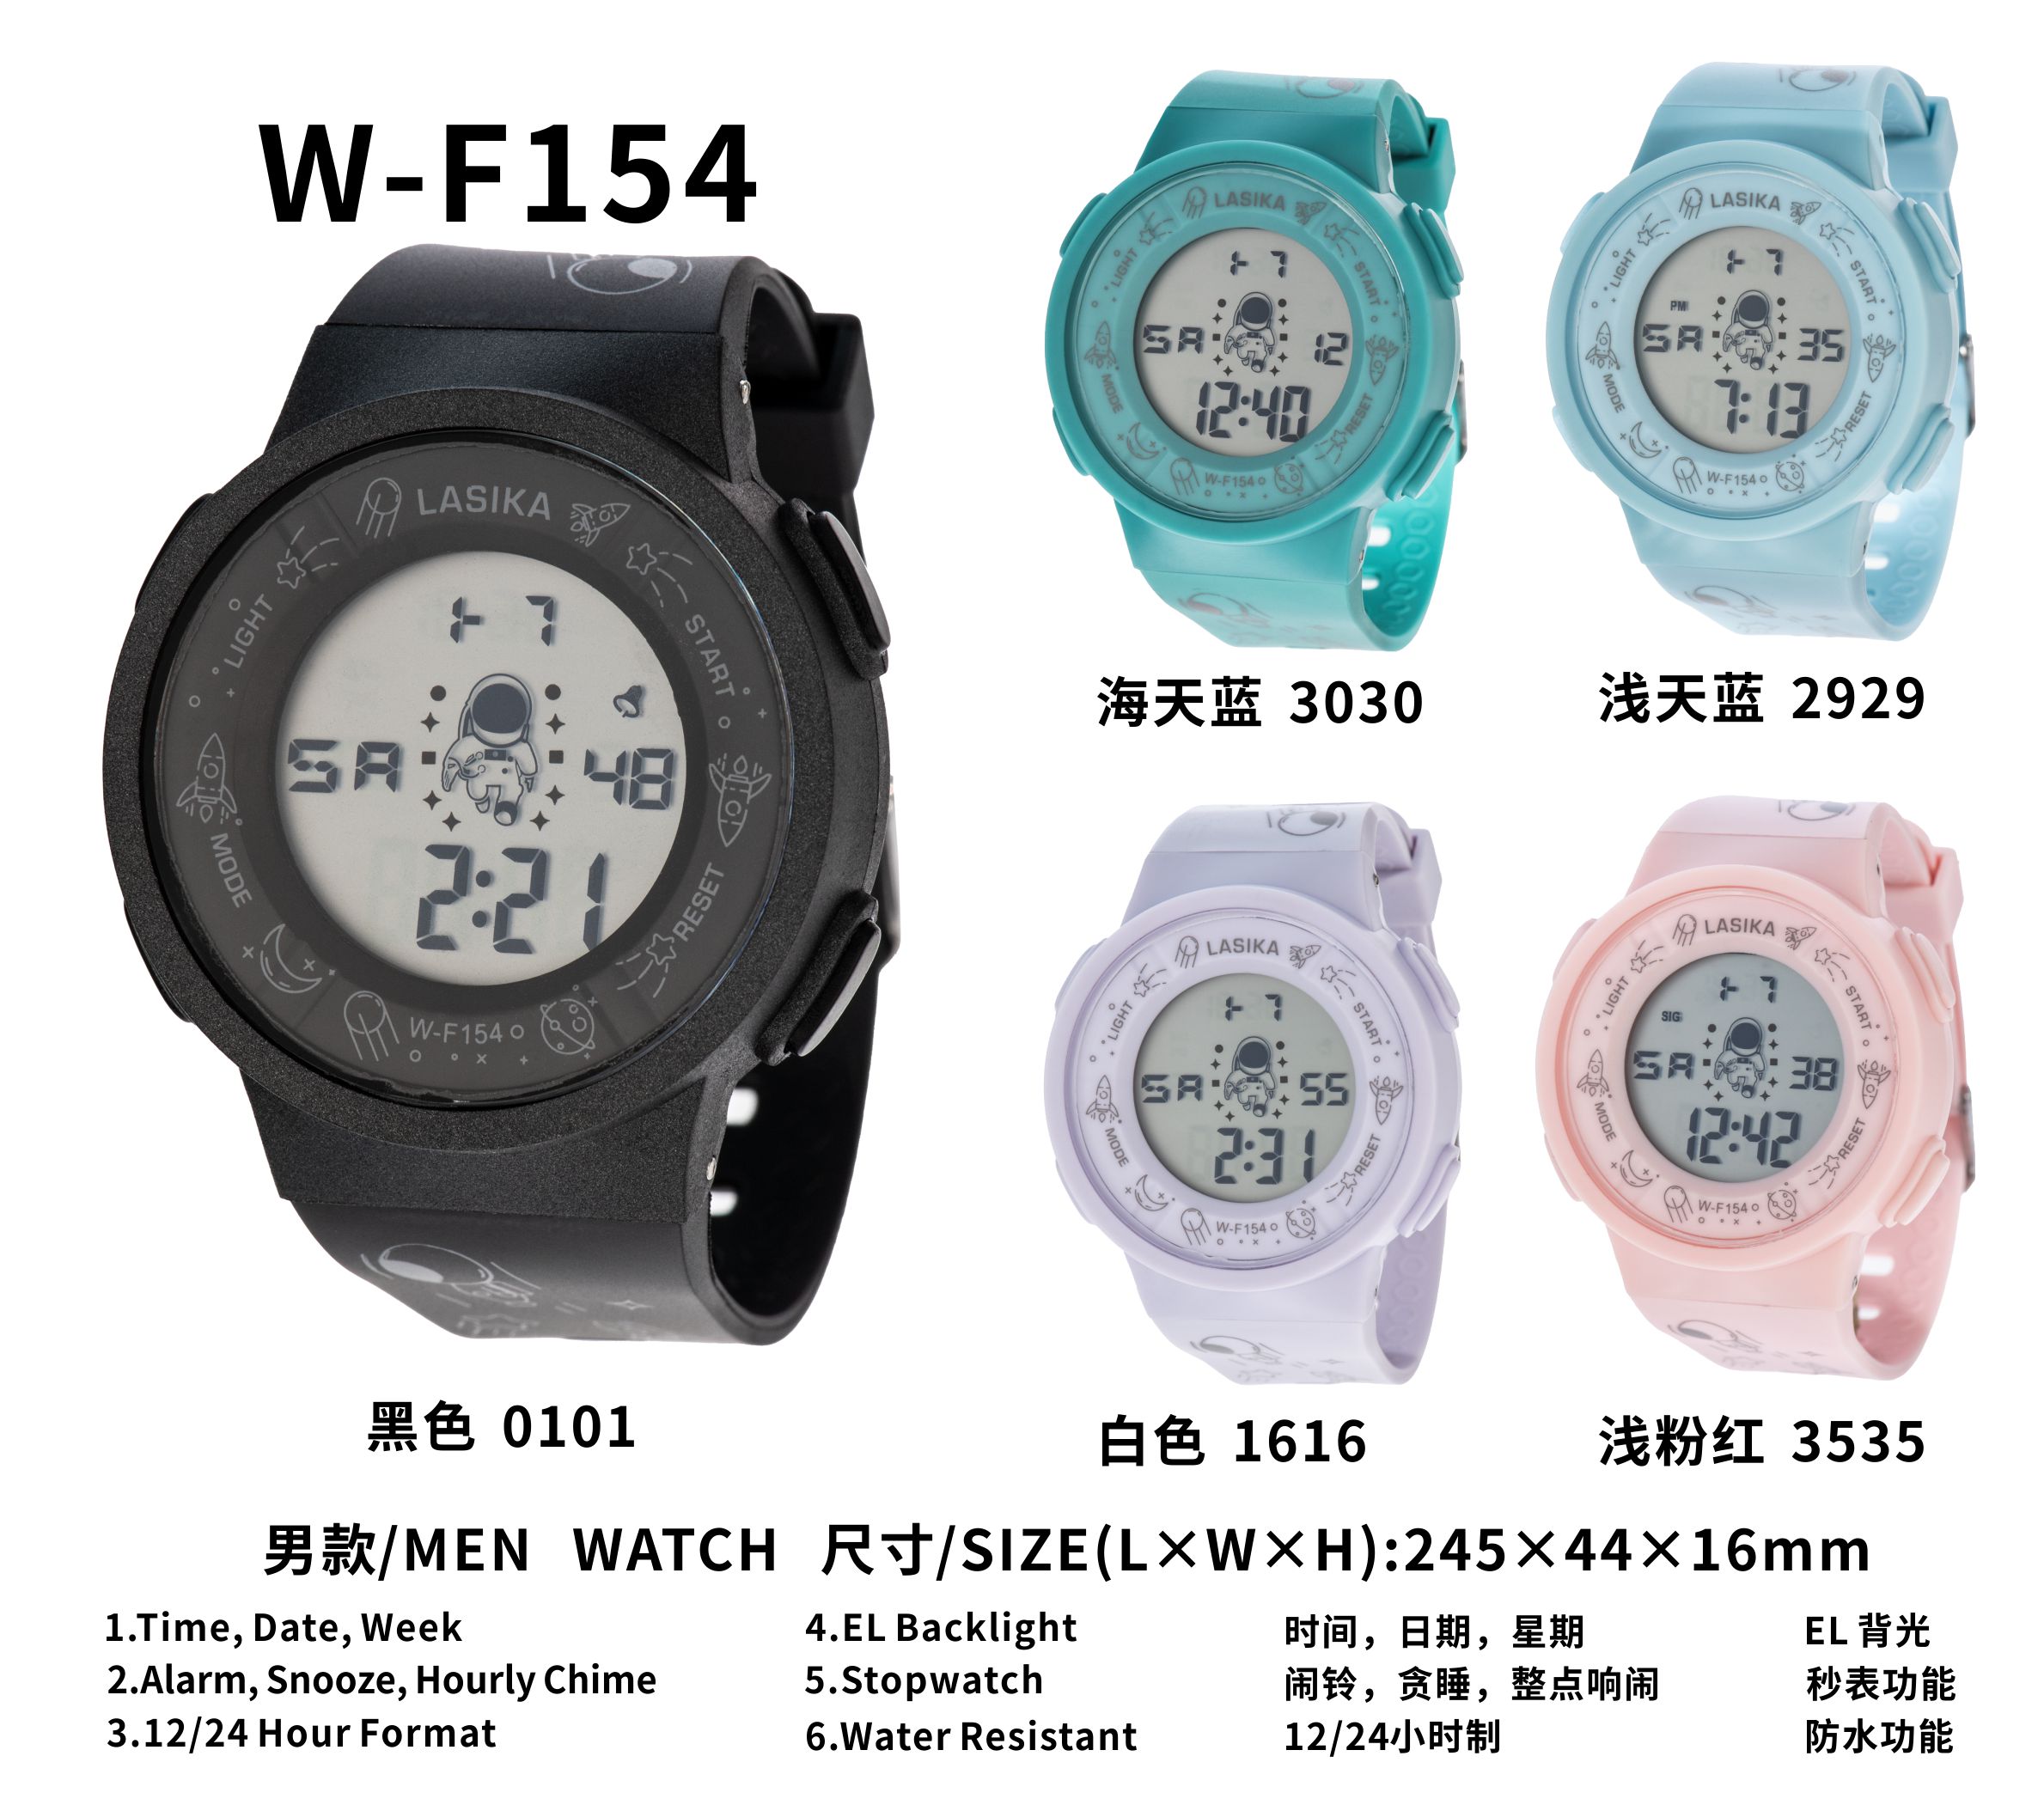 Men's Digital Sports Watch Spaceman Electronic Waterproof Wrist Watches for Men with Stopwatch Alarm #154